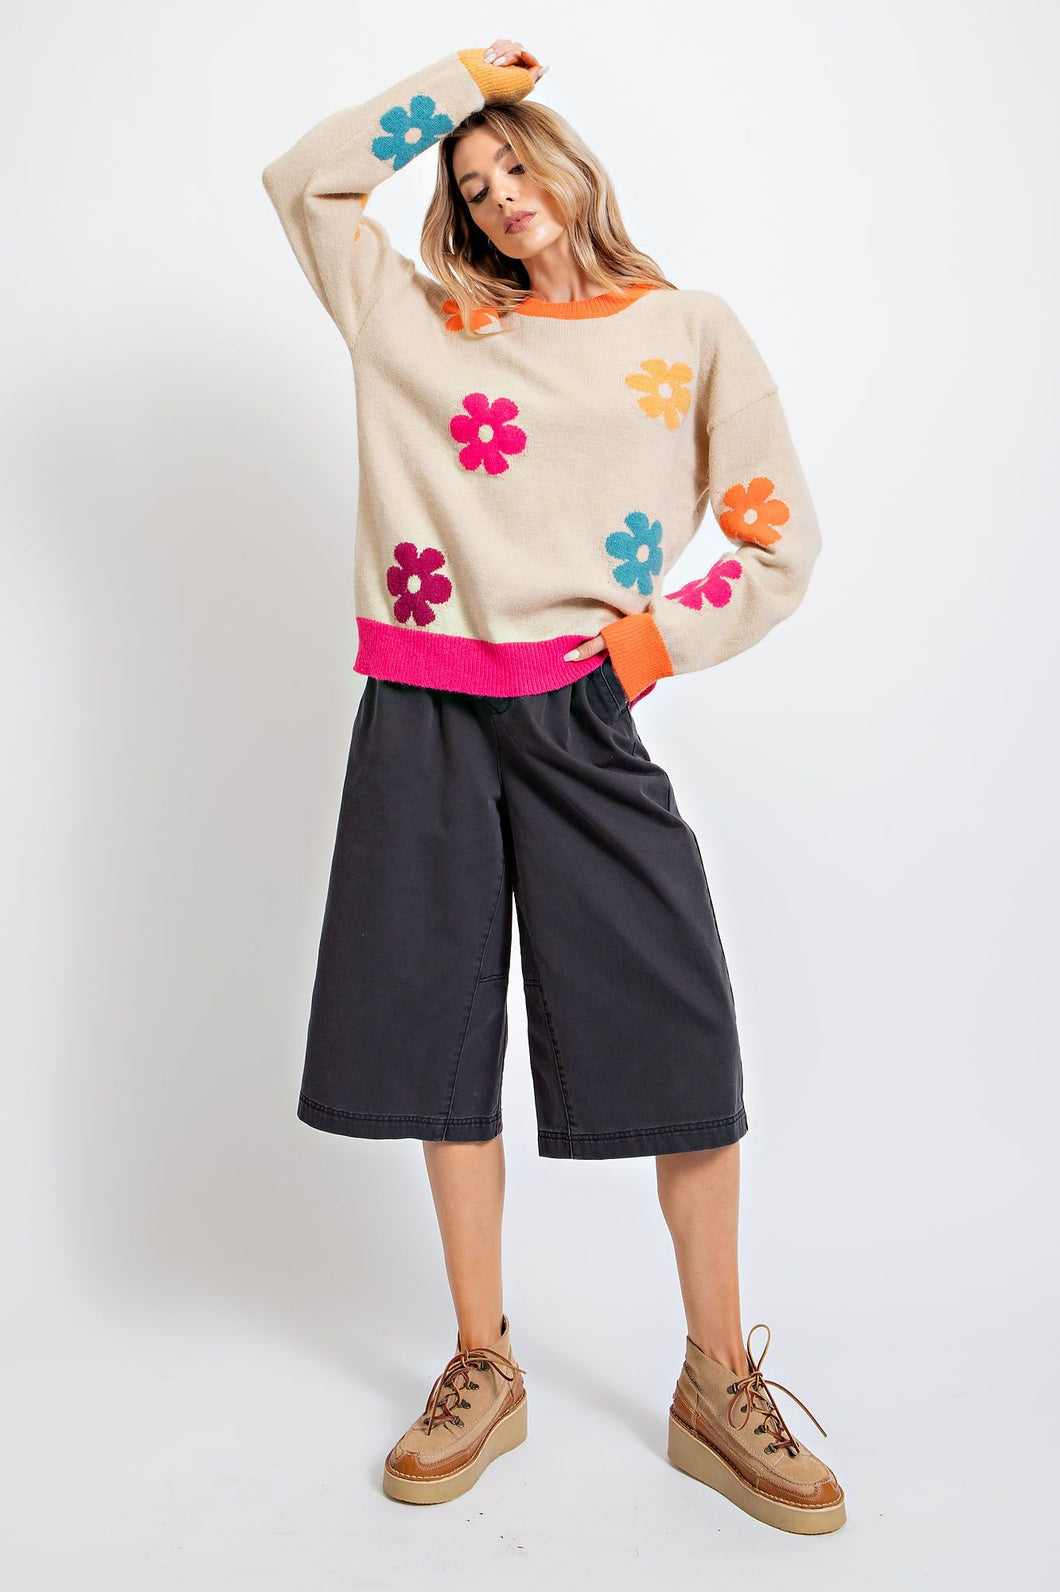 Easel Flower Daisy Patterned Sweater